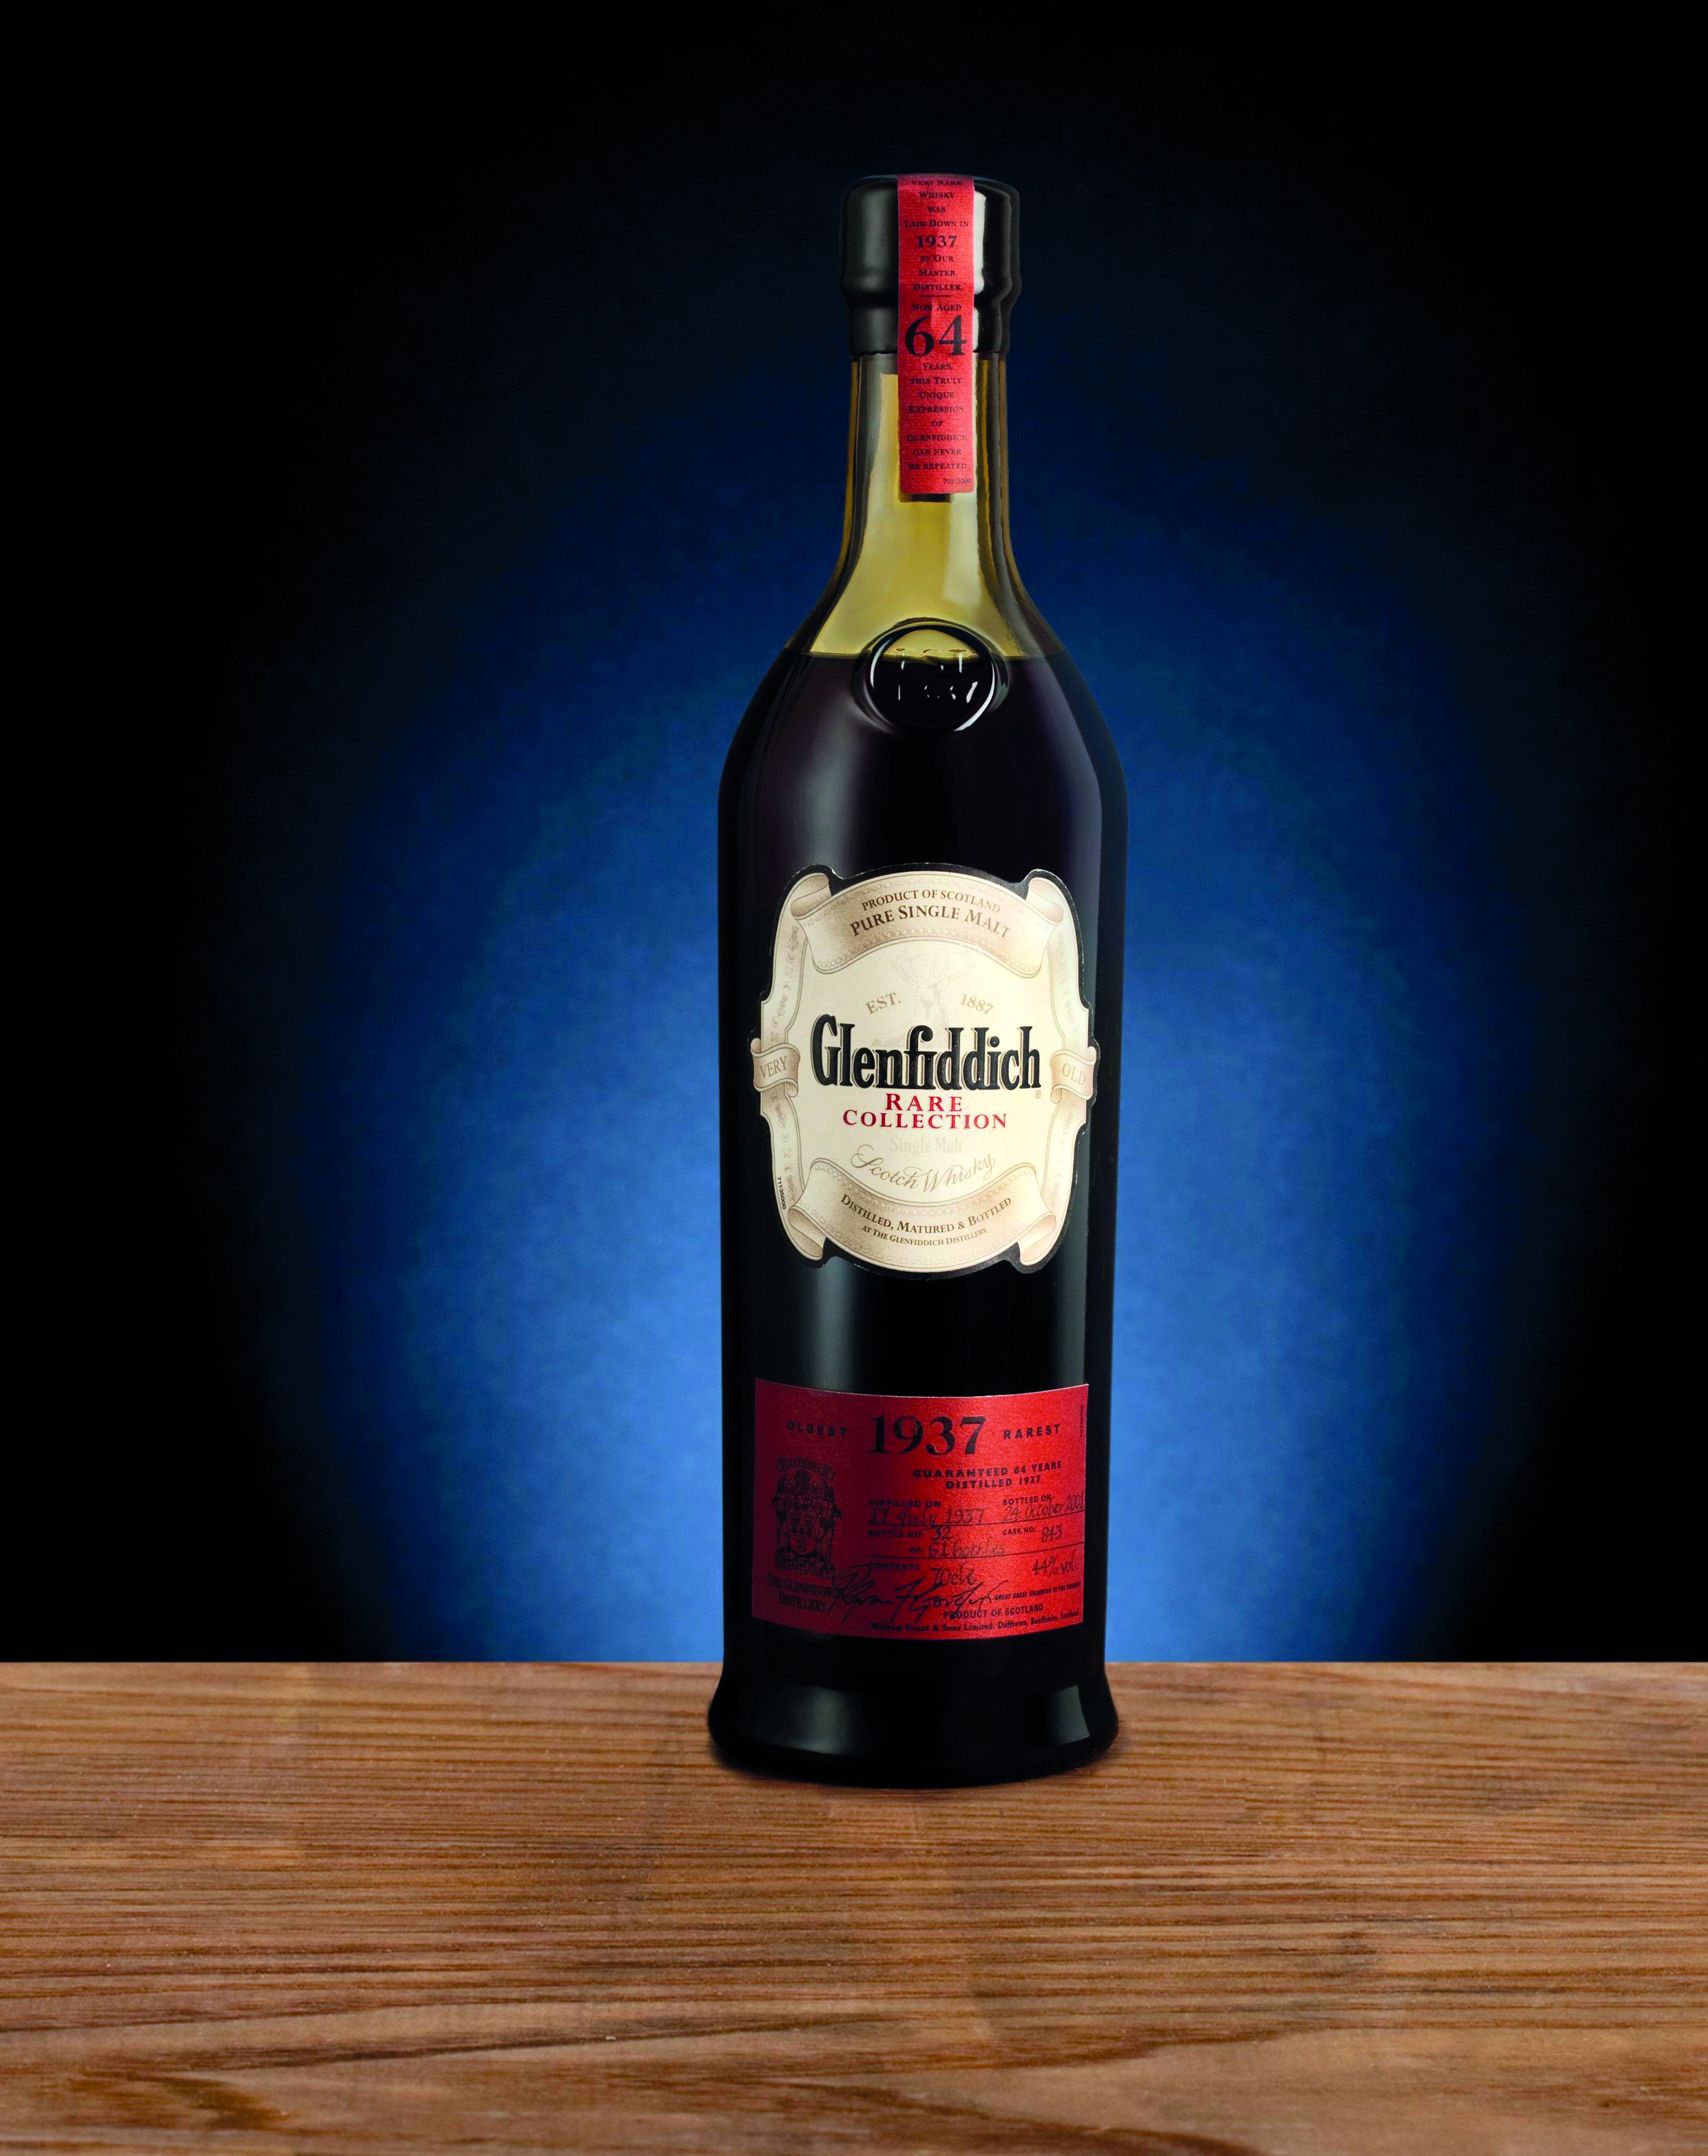 Rare collection. Самый дорогой Glenfiddich. Glenfiddich вино. Glenfiddich rare collection 1995 цена. Whiskies expenisve.